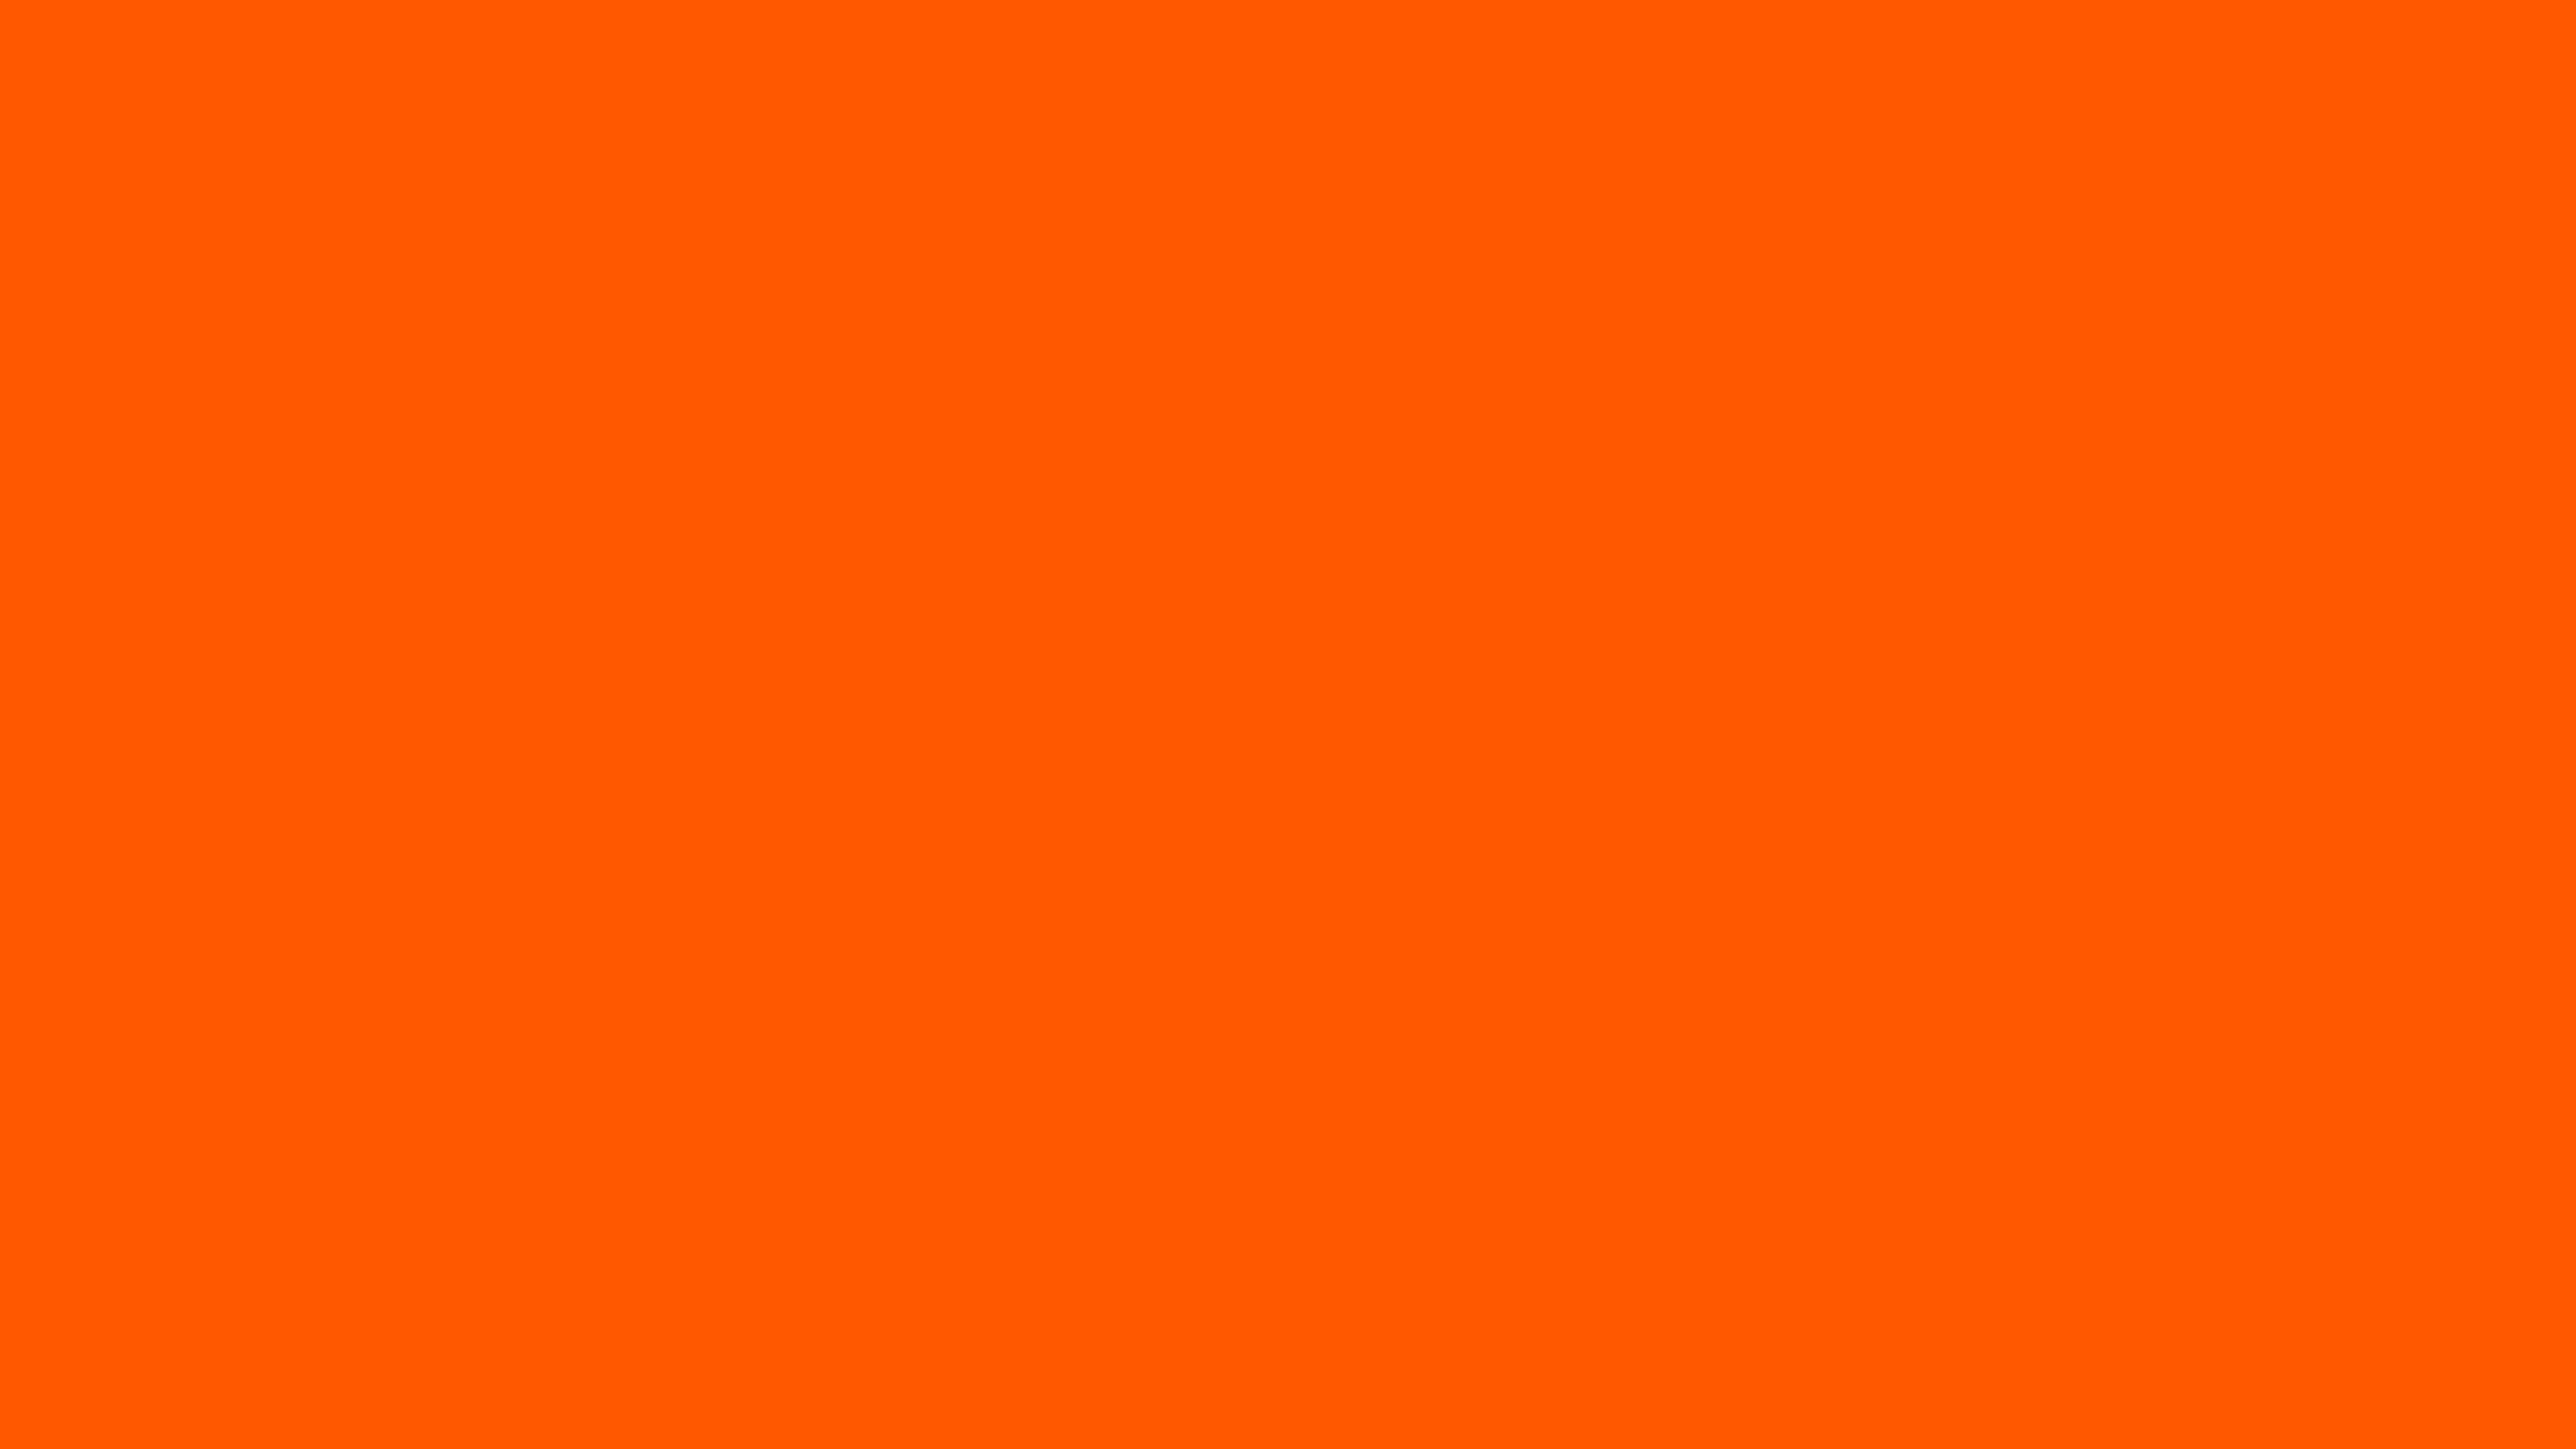 7680x4320 Orange Pantone Solid Color Background